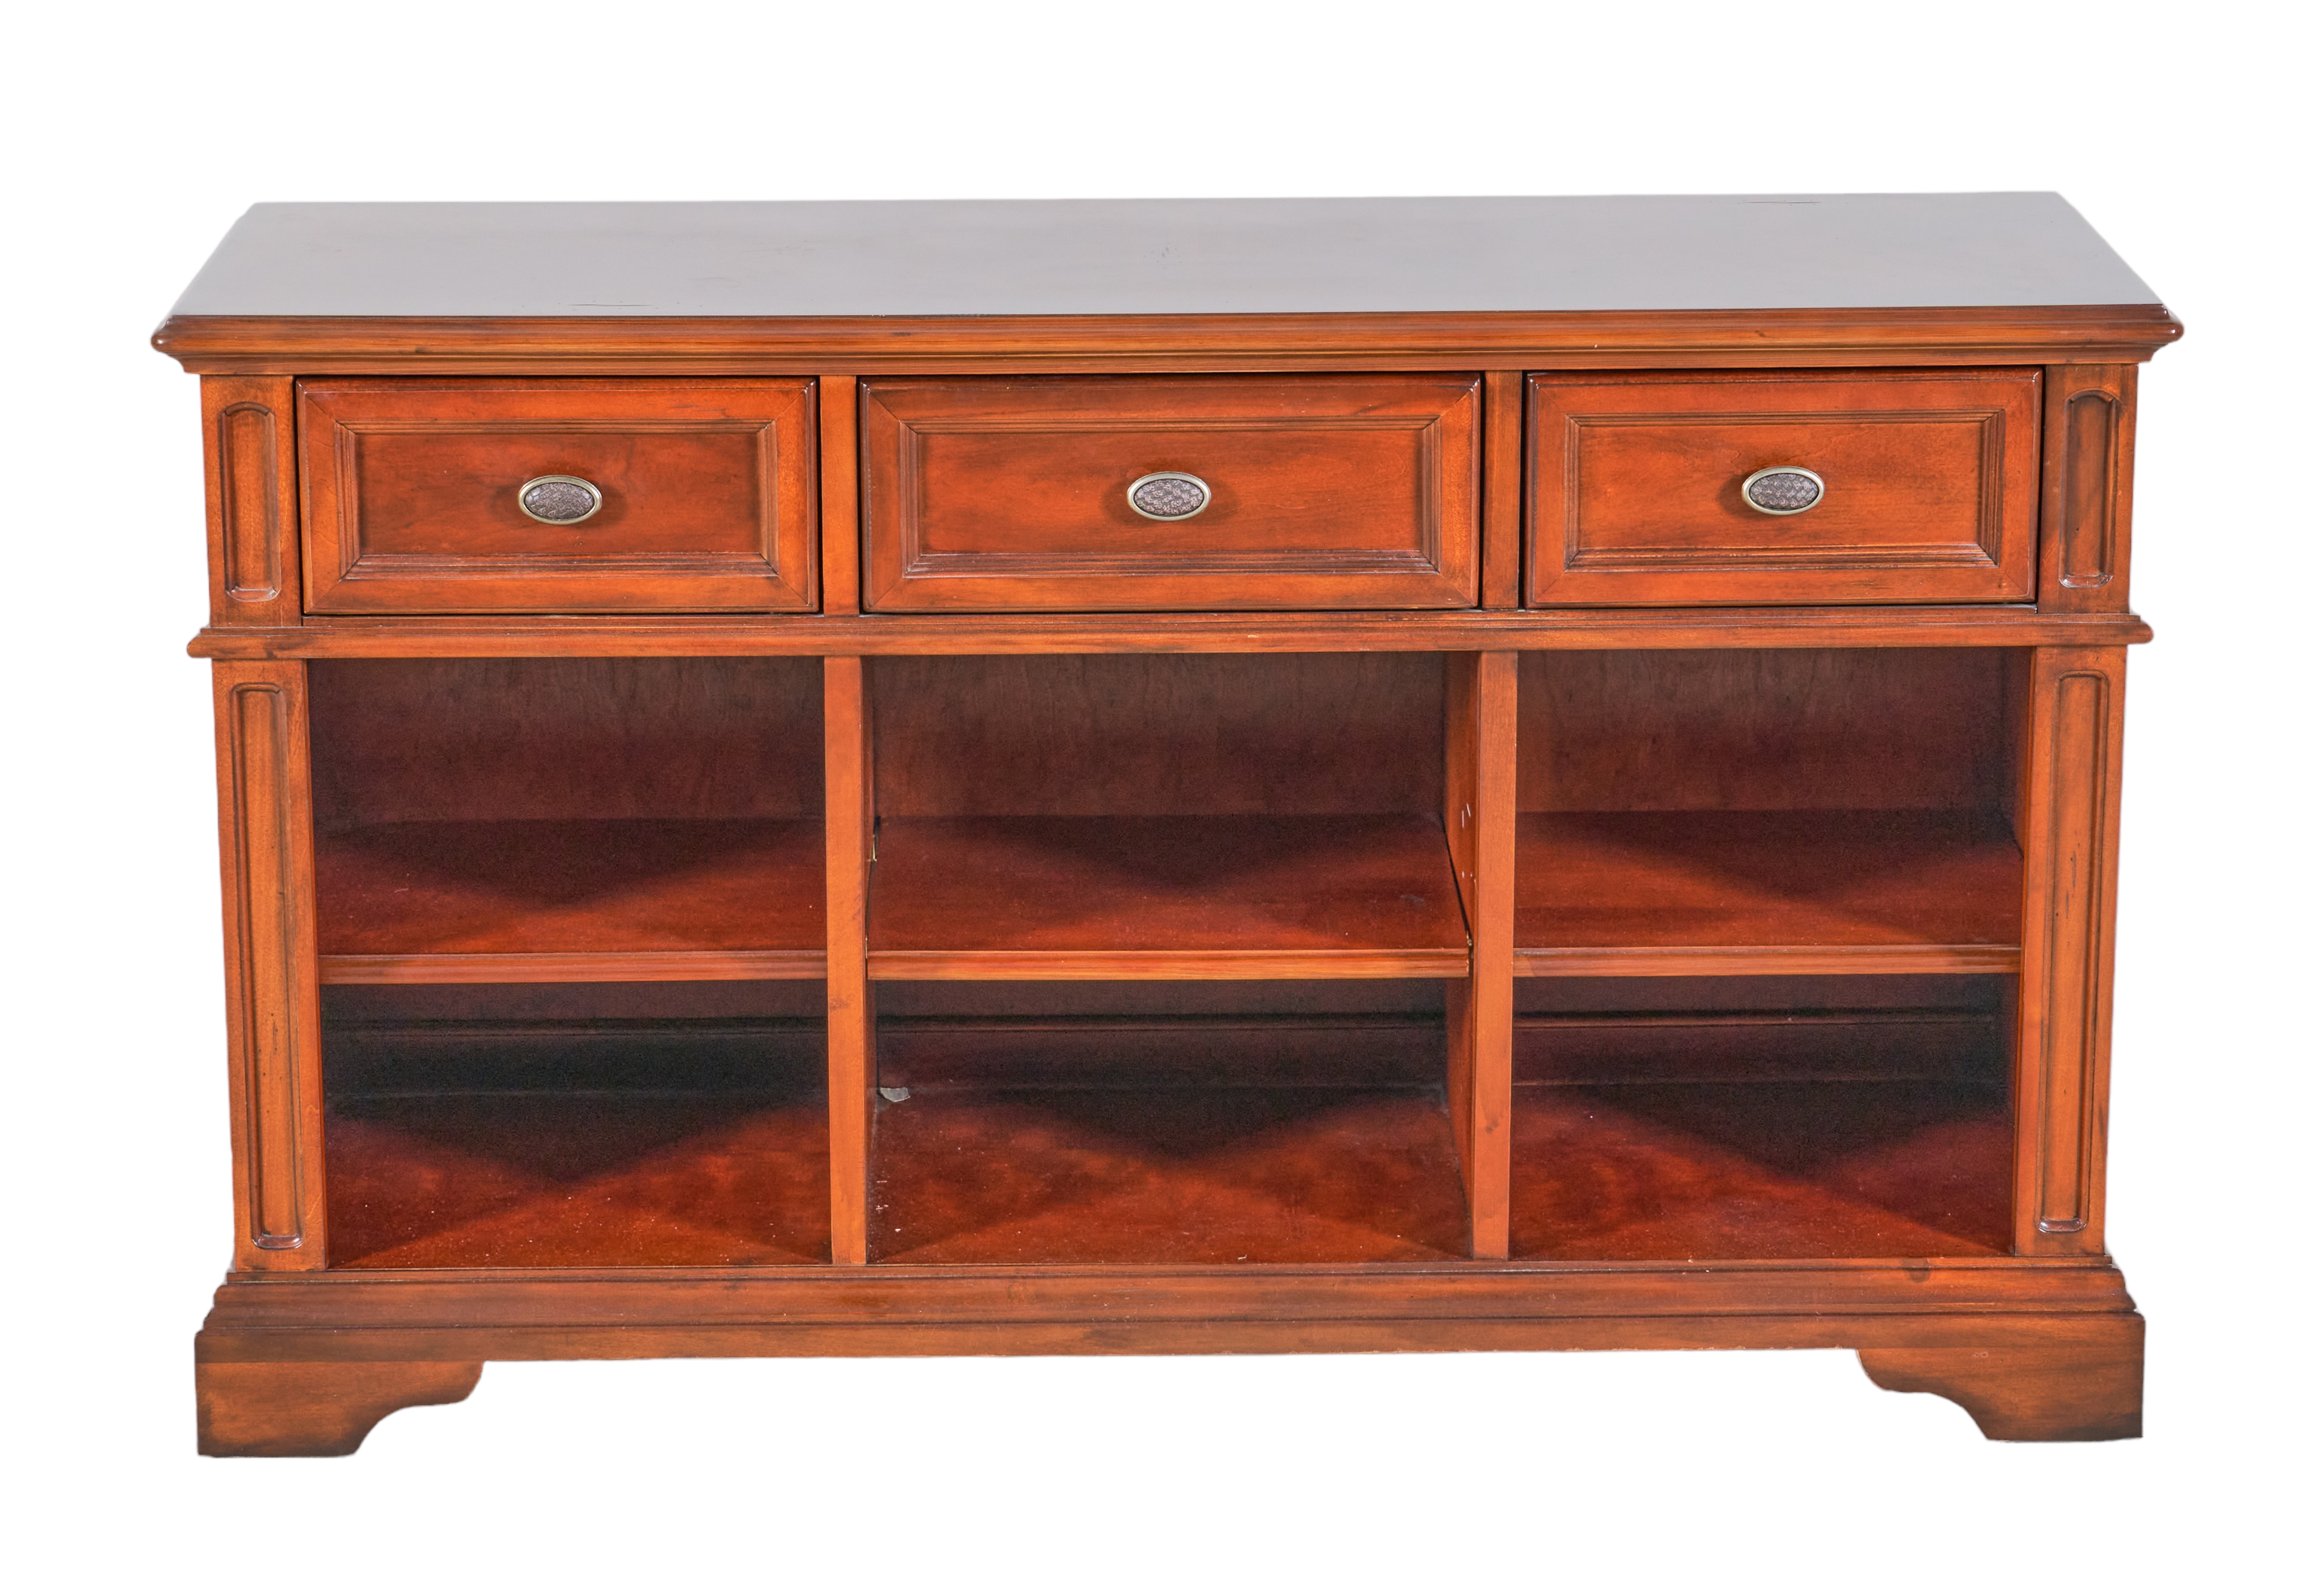 Universal furniture mahogany sideboard,